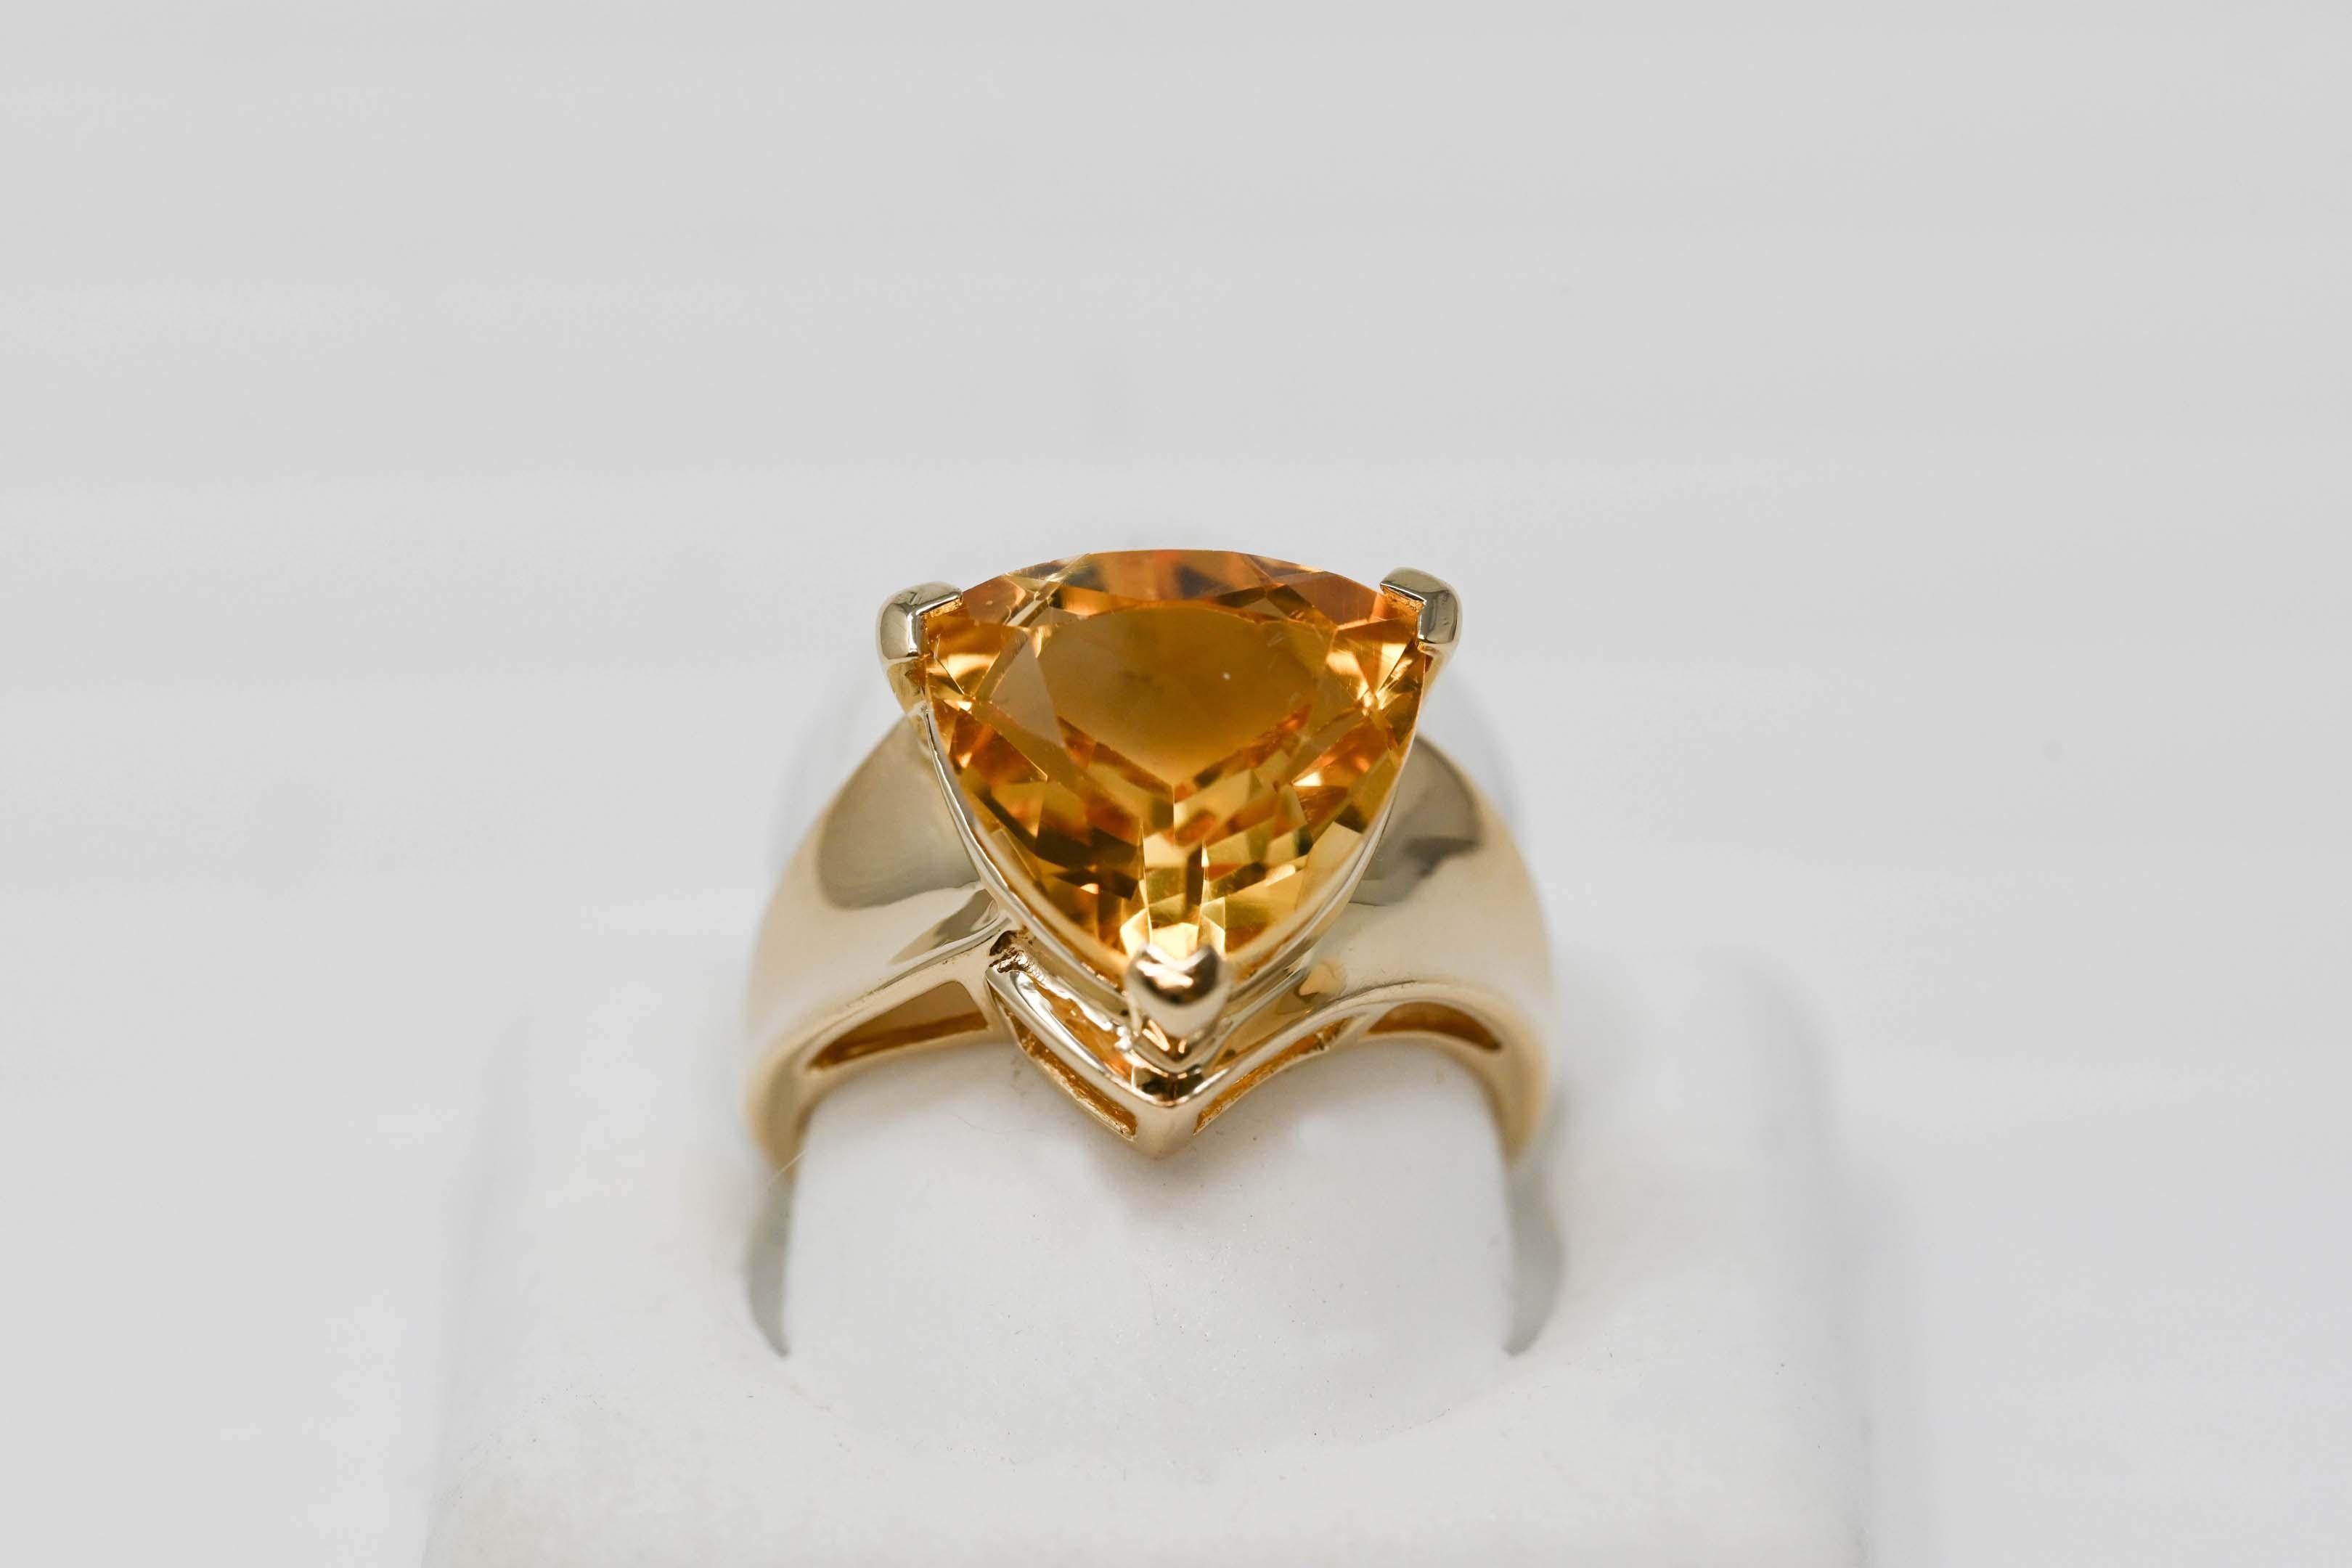 Citrine yellow topaz 14k gold vintage ring size 5 1/4. (5) resizable. Stamped 14k maker B.H. 5 grams.